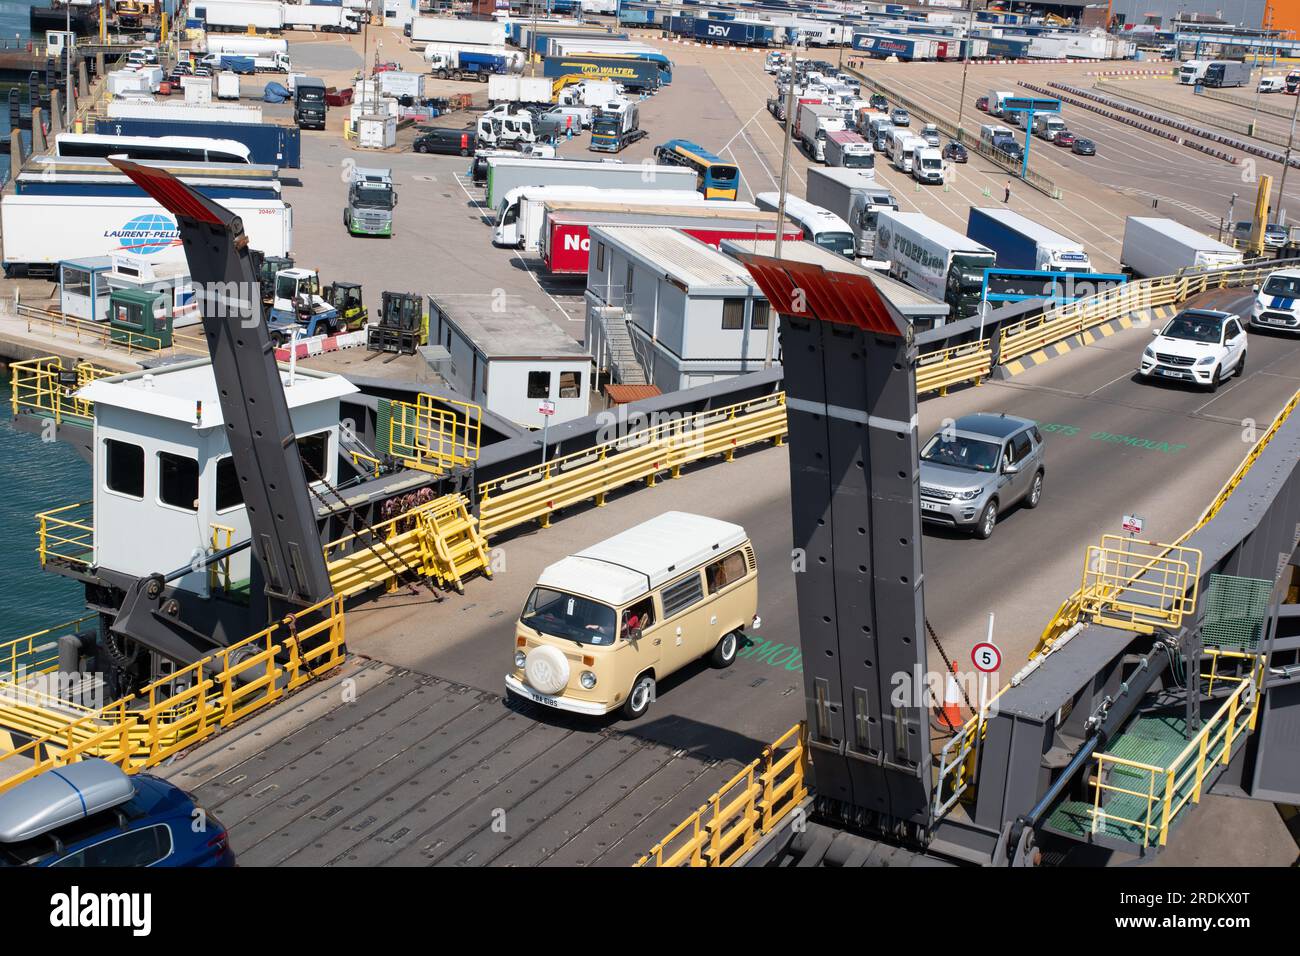 Cars boarding a cross channel ferry Stock Photo